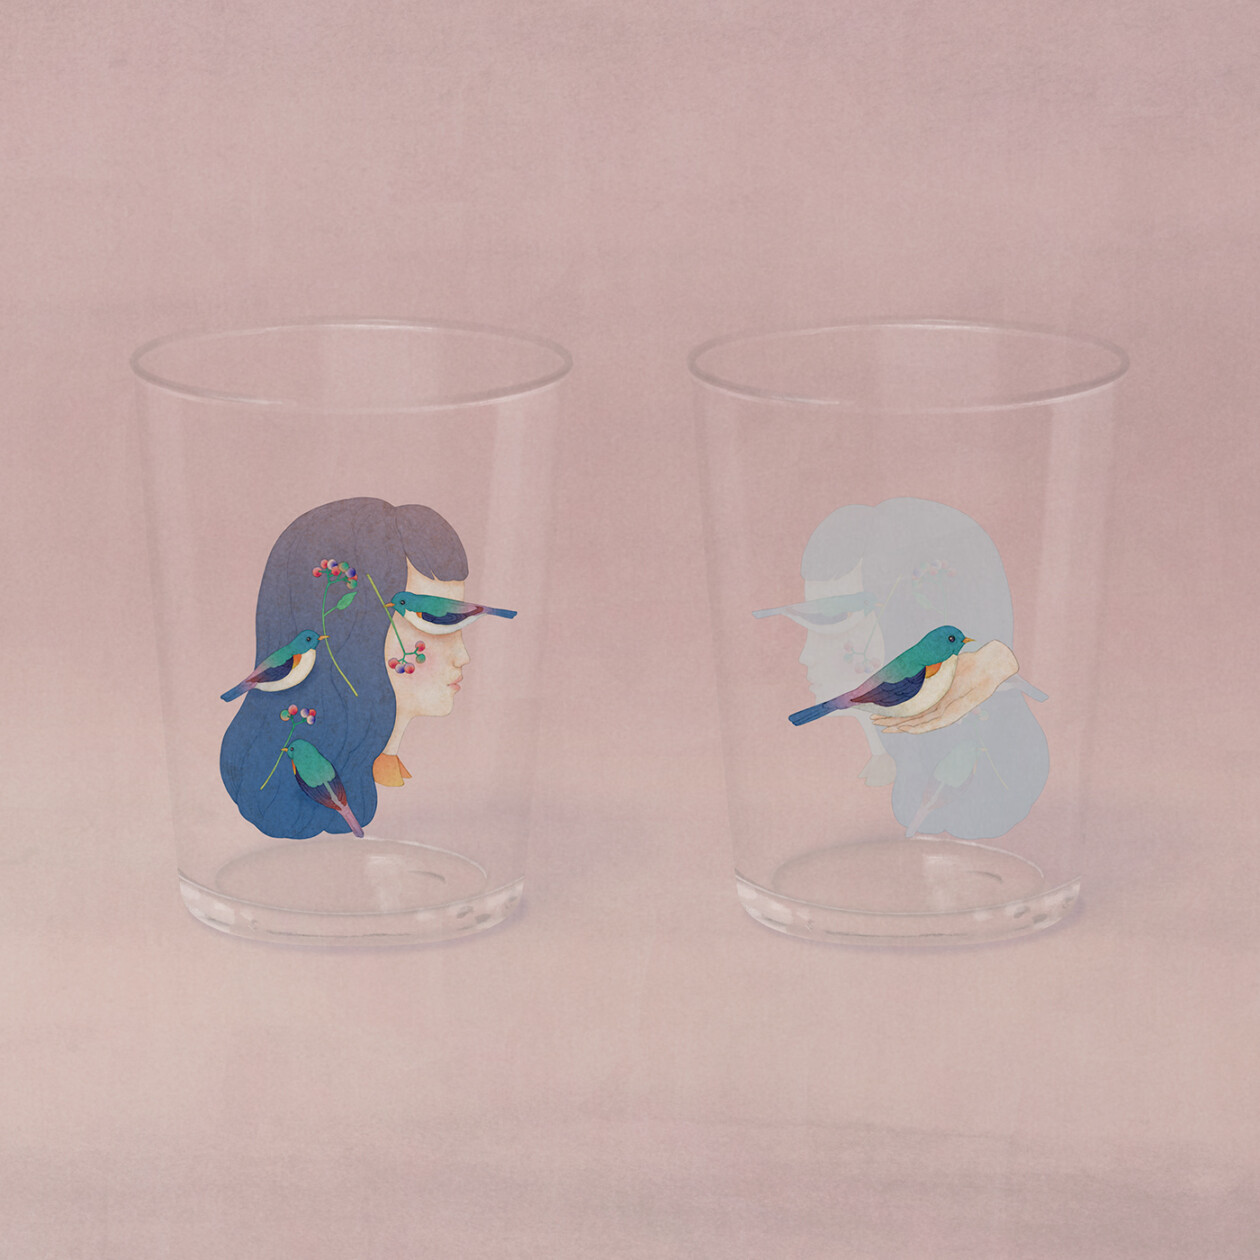 Delicately Illustrated Glassware By Whooli Chen And Di Chun Chen (8)